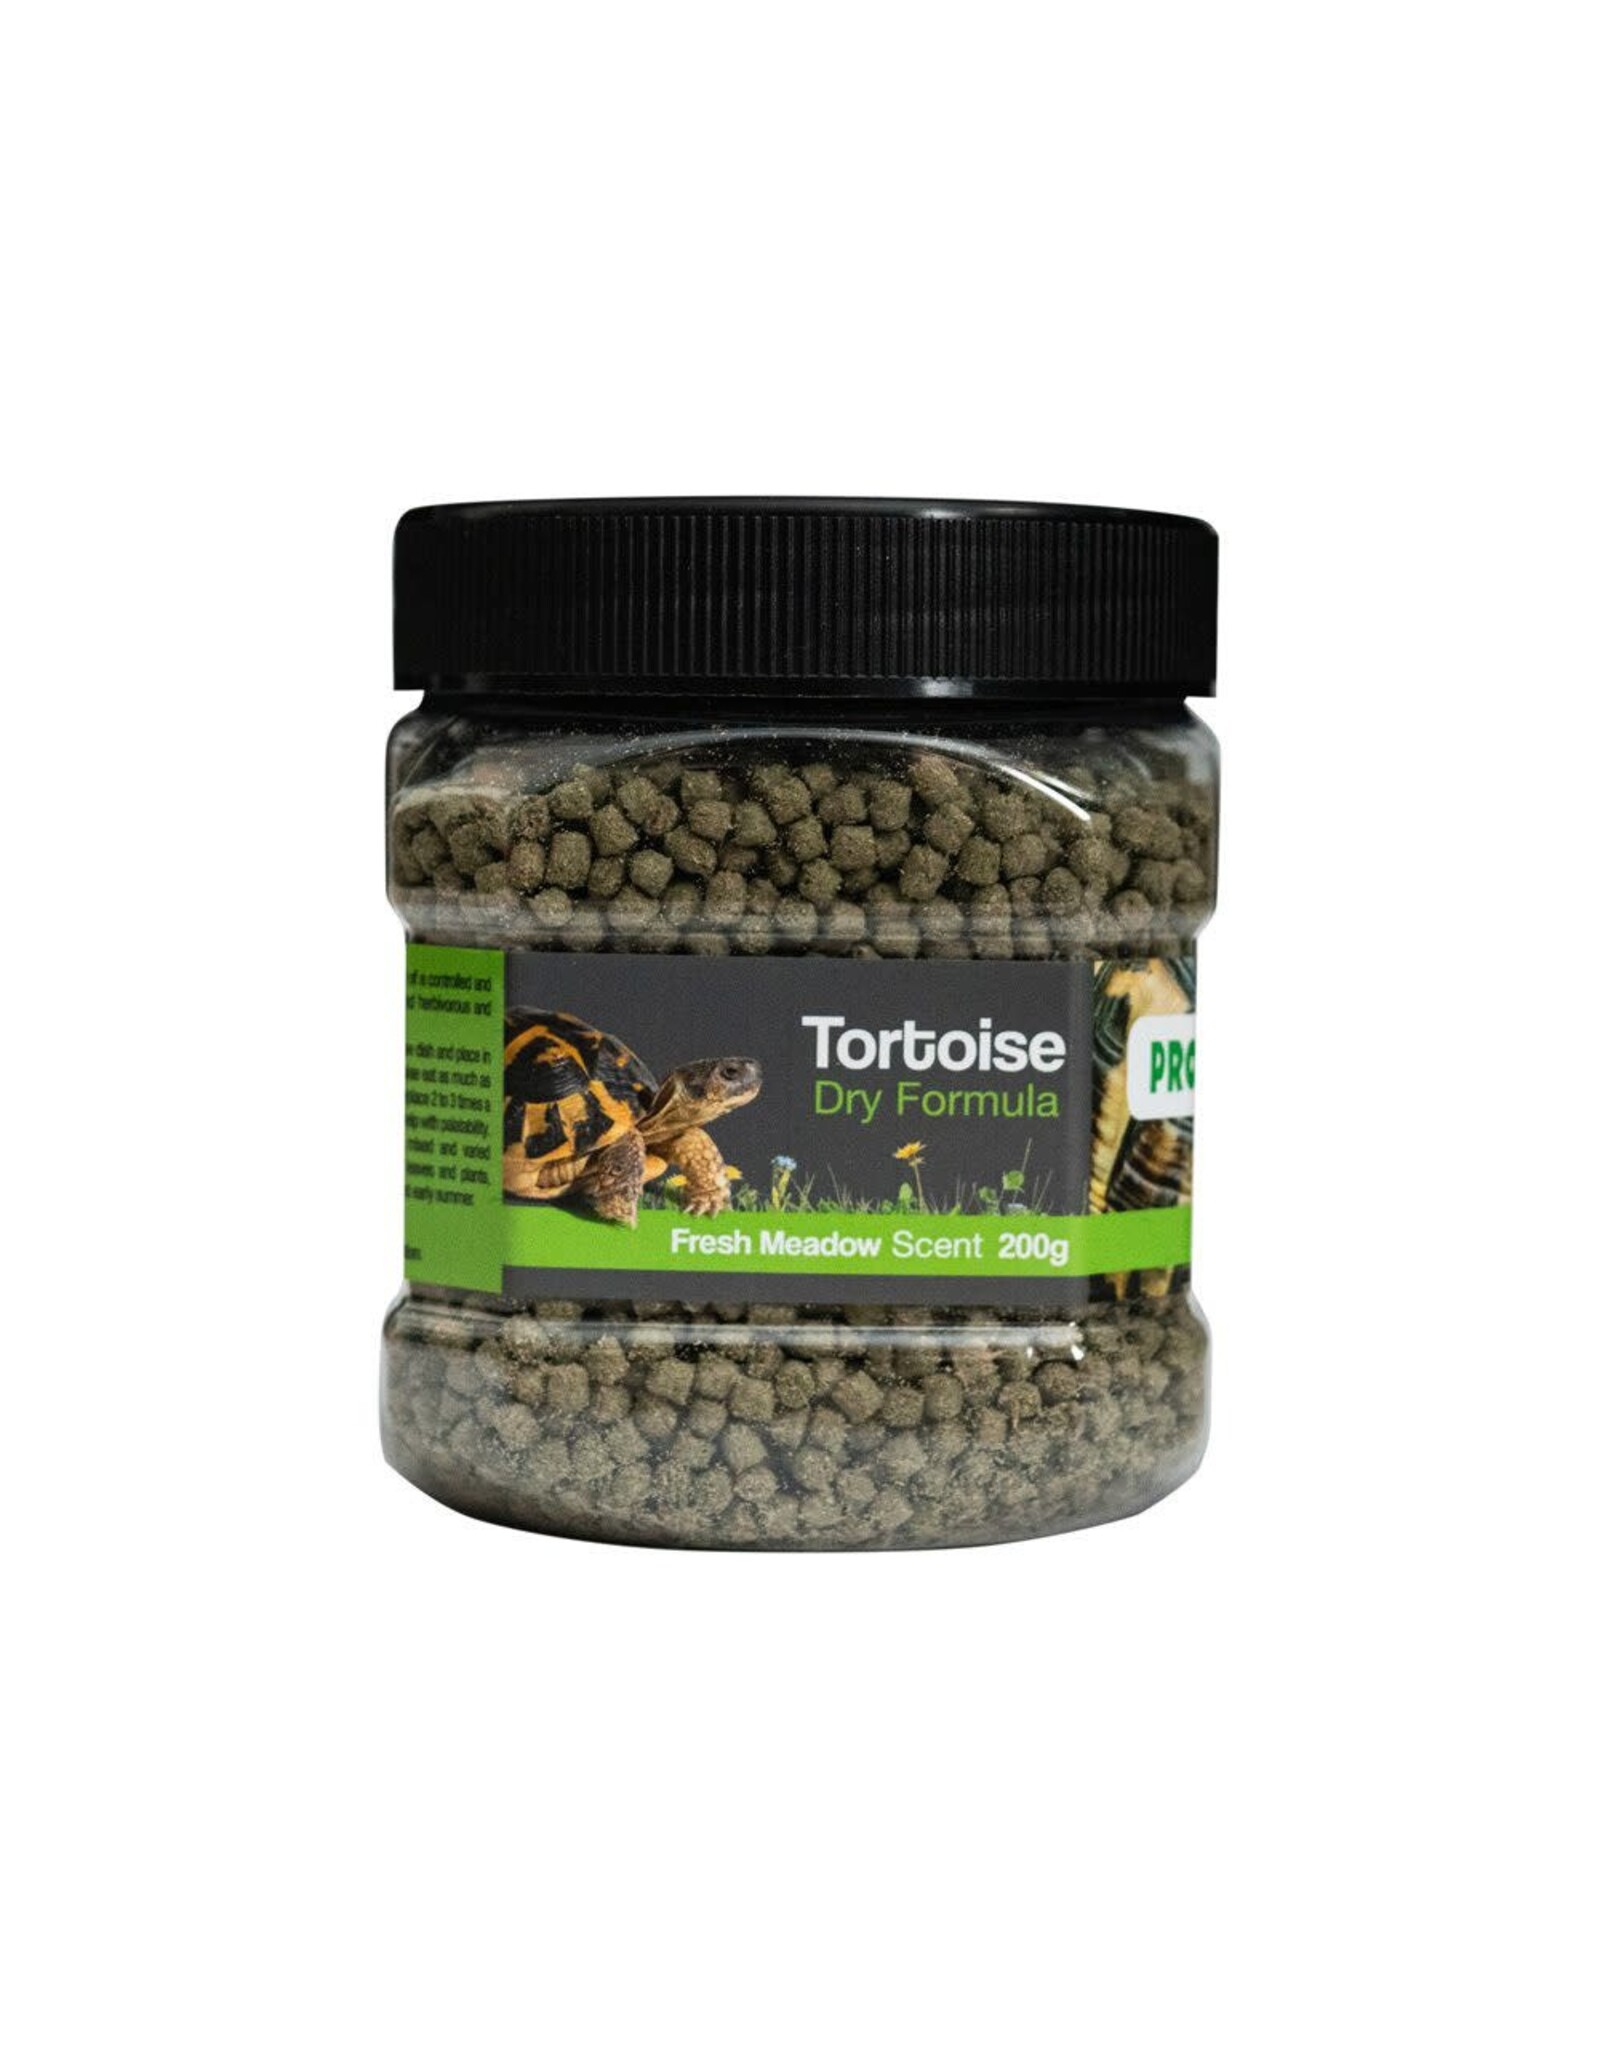 Pro Rep PR Tortoise Dry Food Meadow